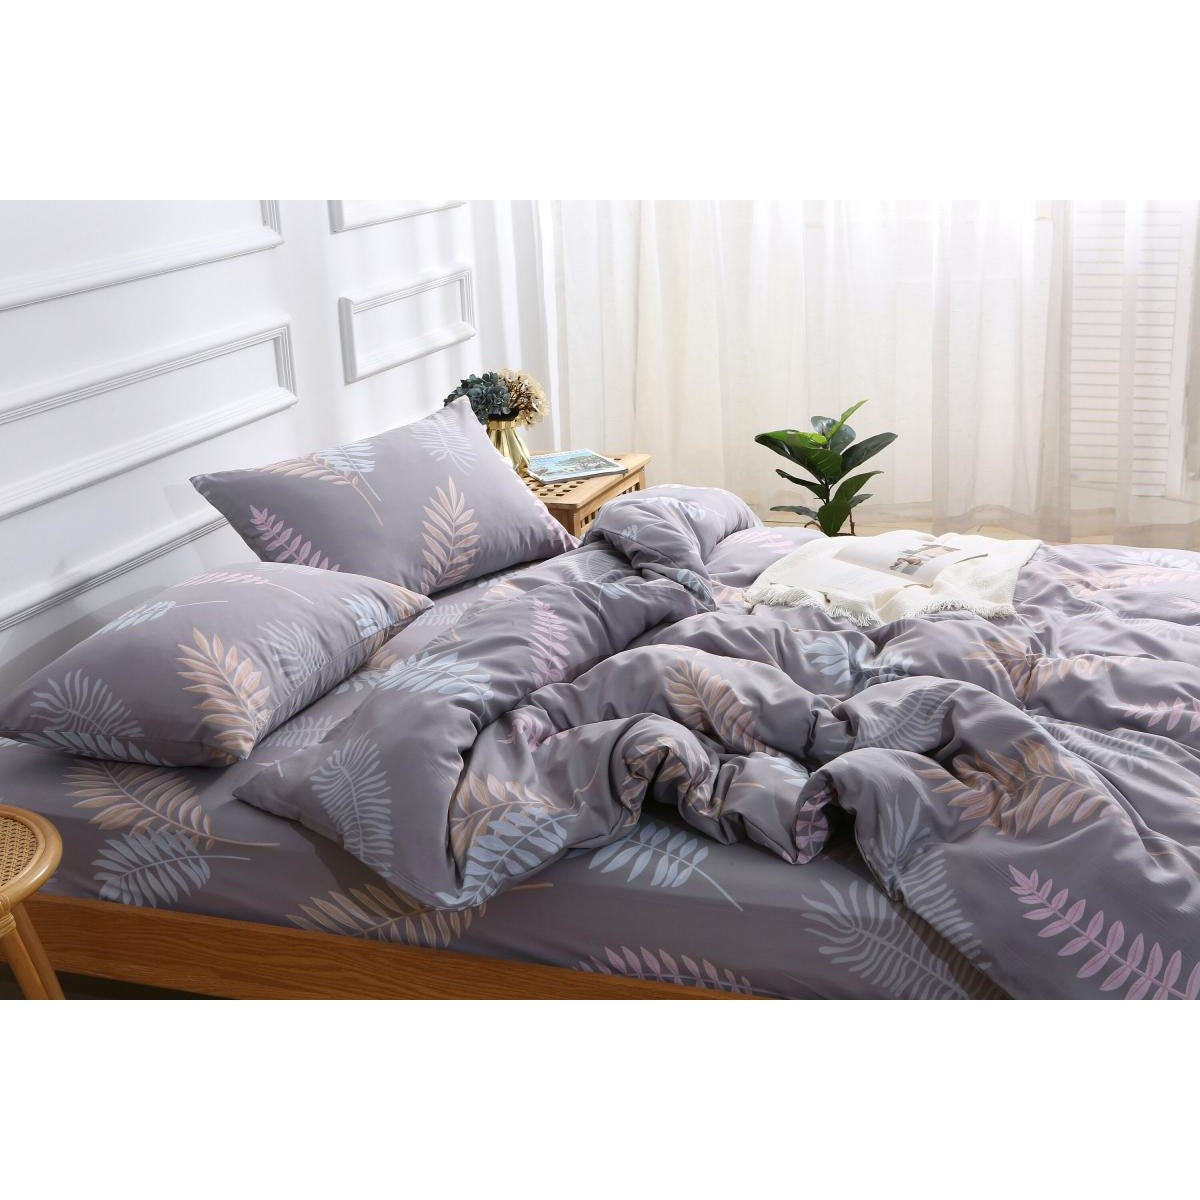 Buy Premium Bedding Sets (Fitted Sheet + Duvet Cover + Pillowcases)